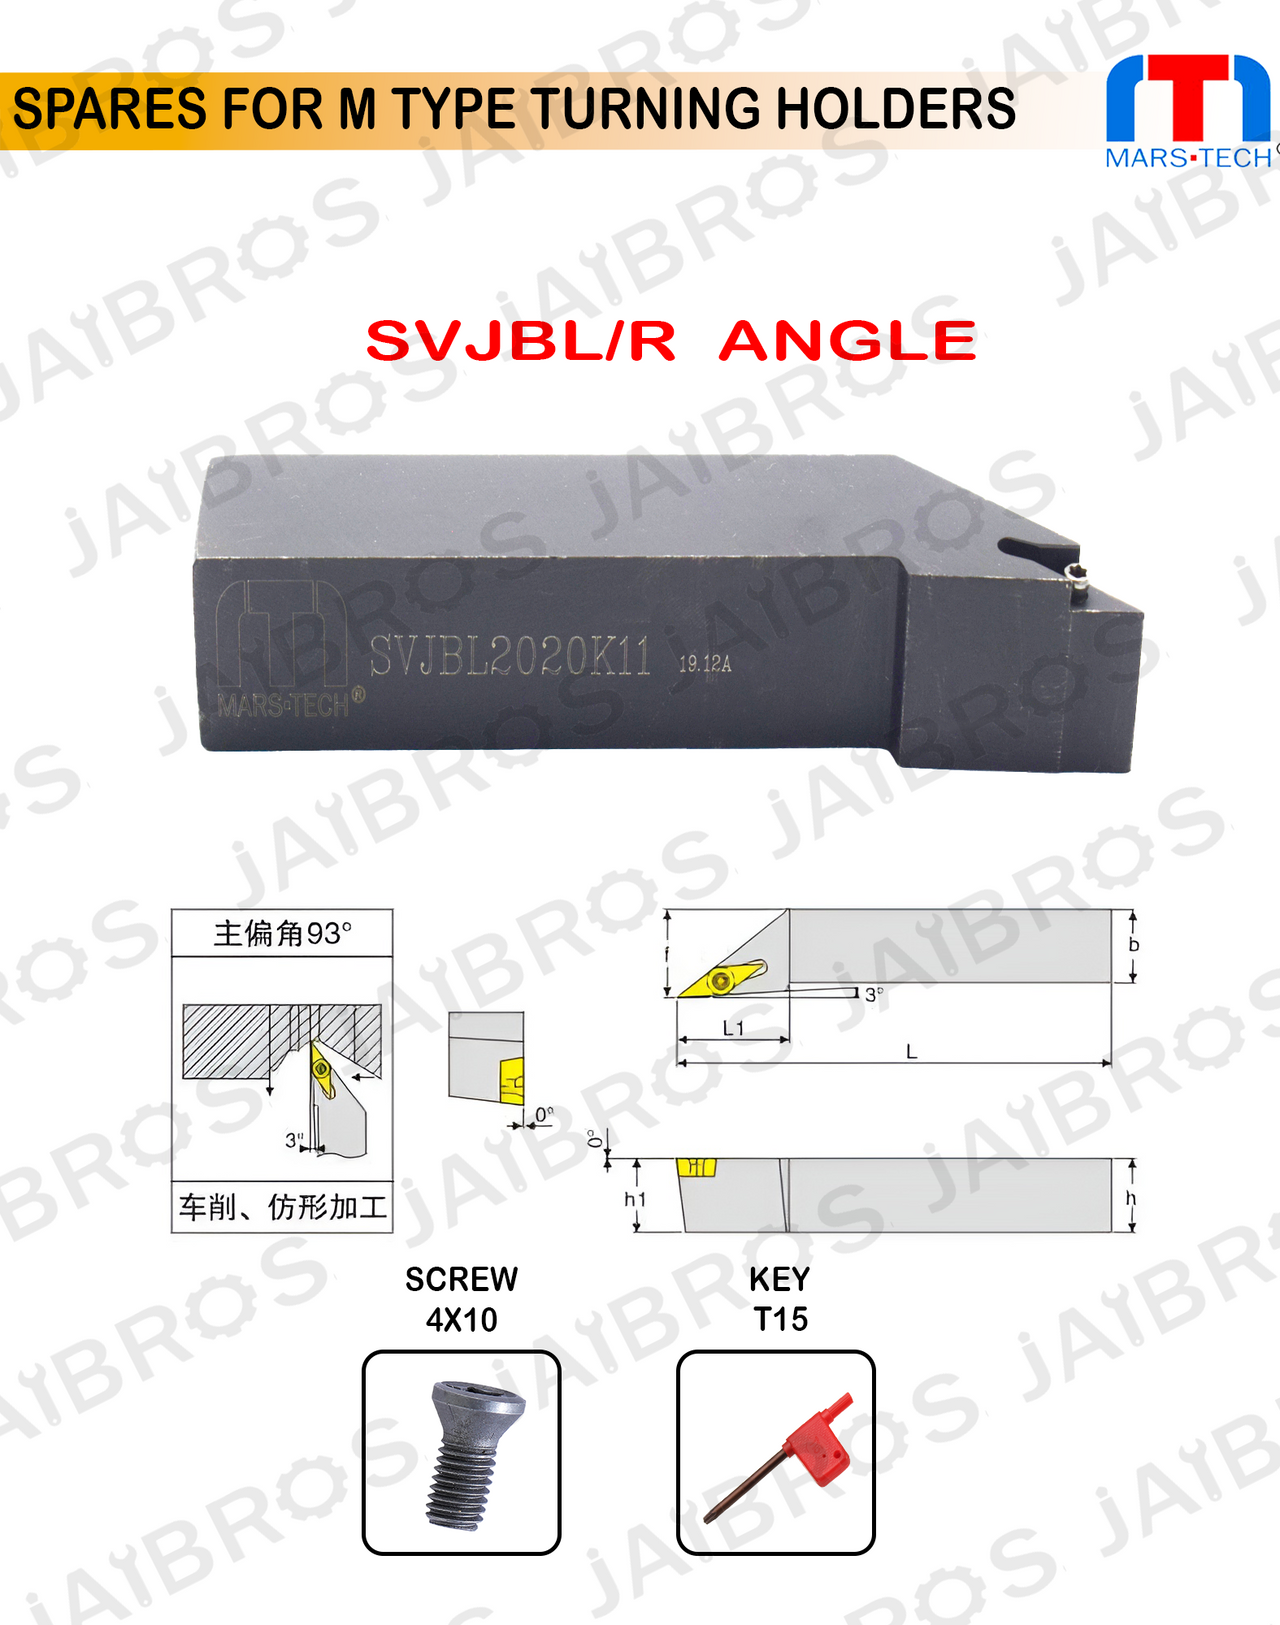 SVJBL/R vbmt holder 2525-M16 shank pack of 1